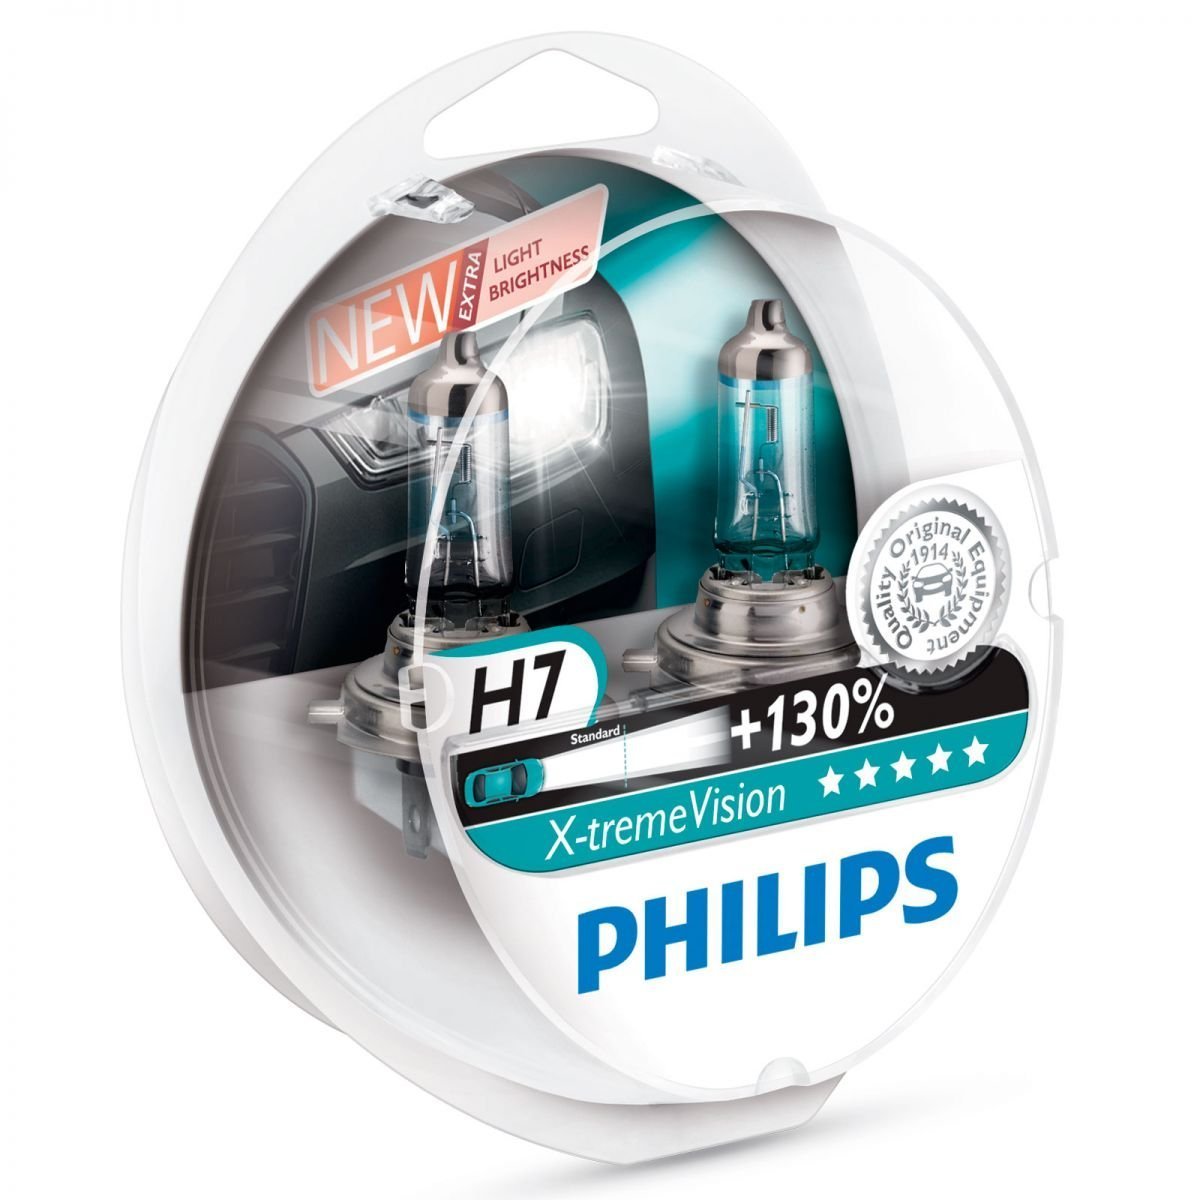 Philips X-treme Vision H7 Headlight Bulb